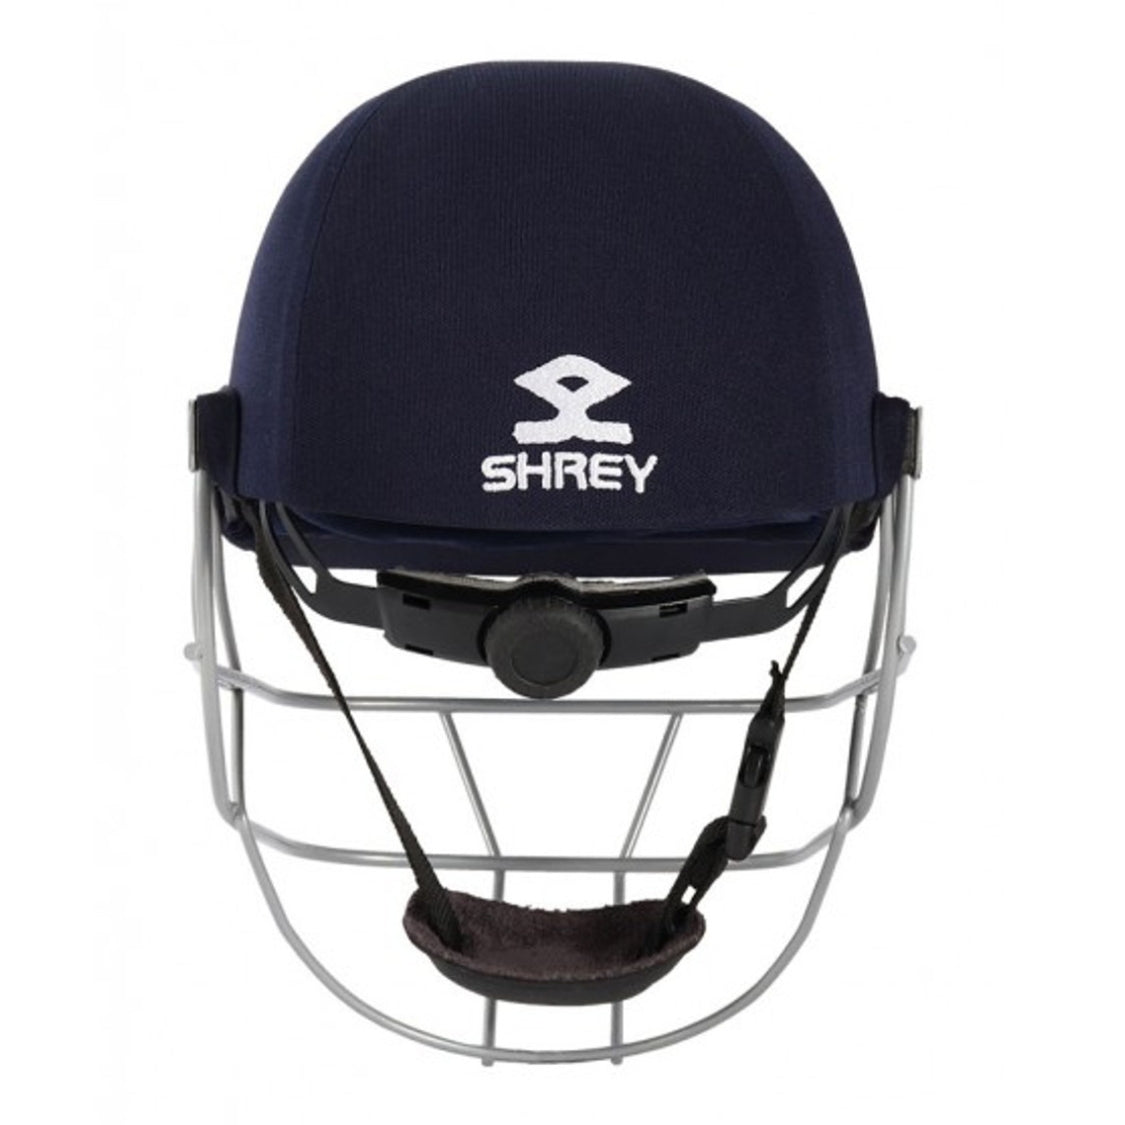 Shrey Cricket Batting Helmet, Model Classic